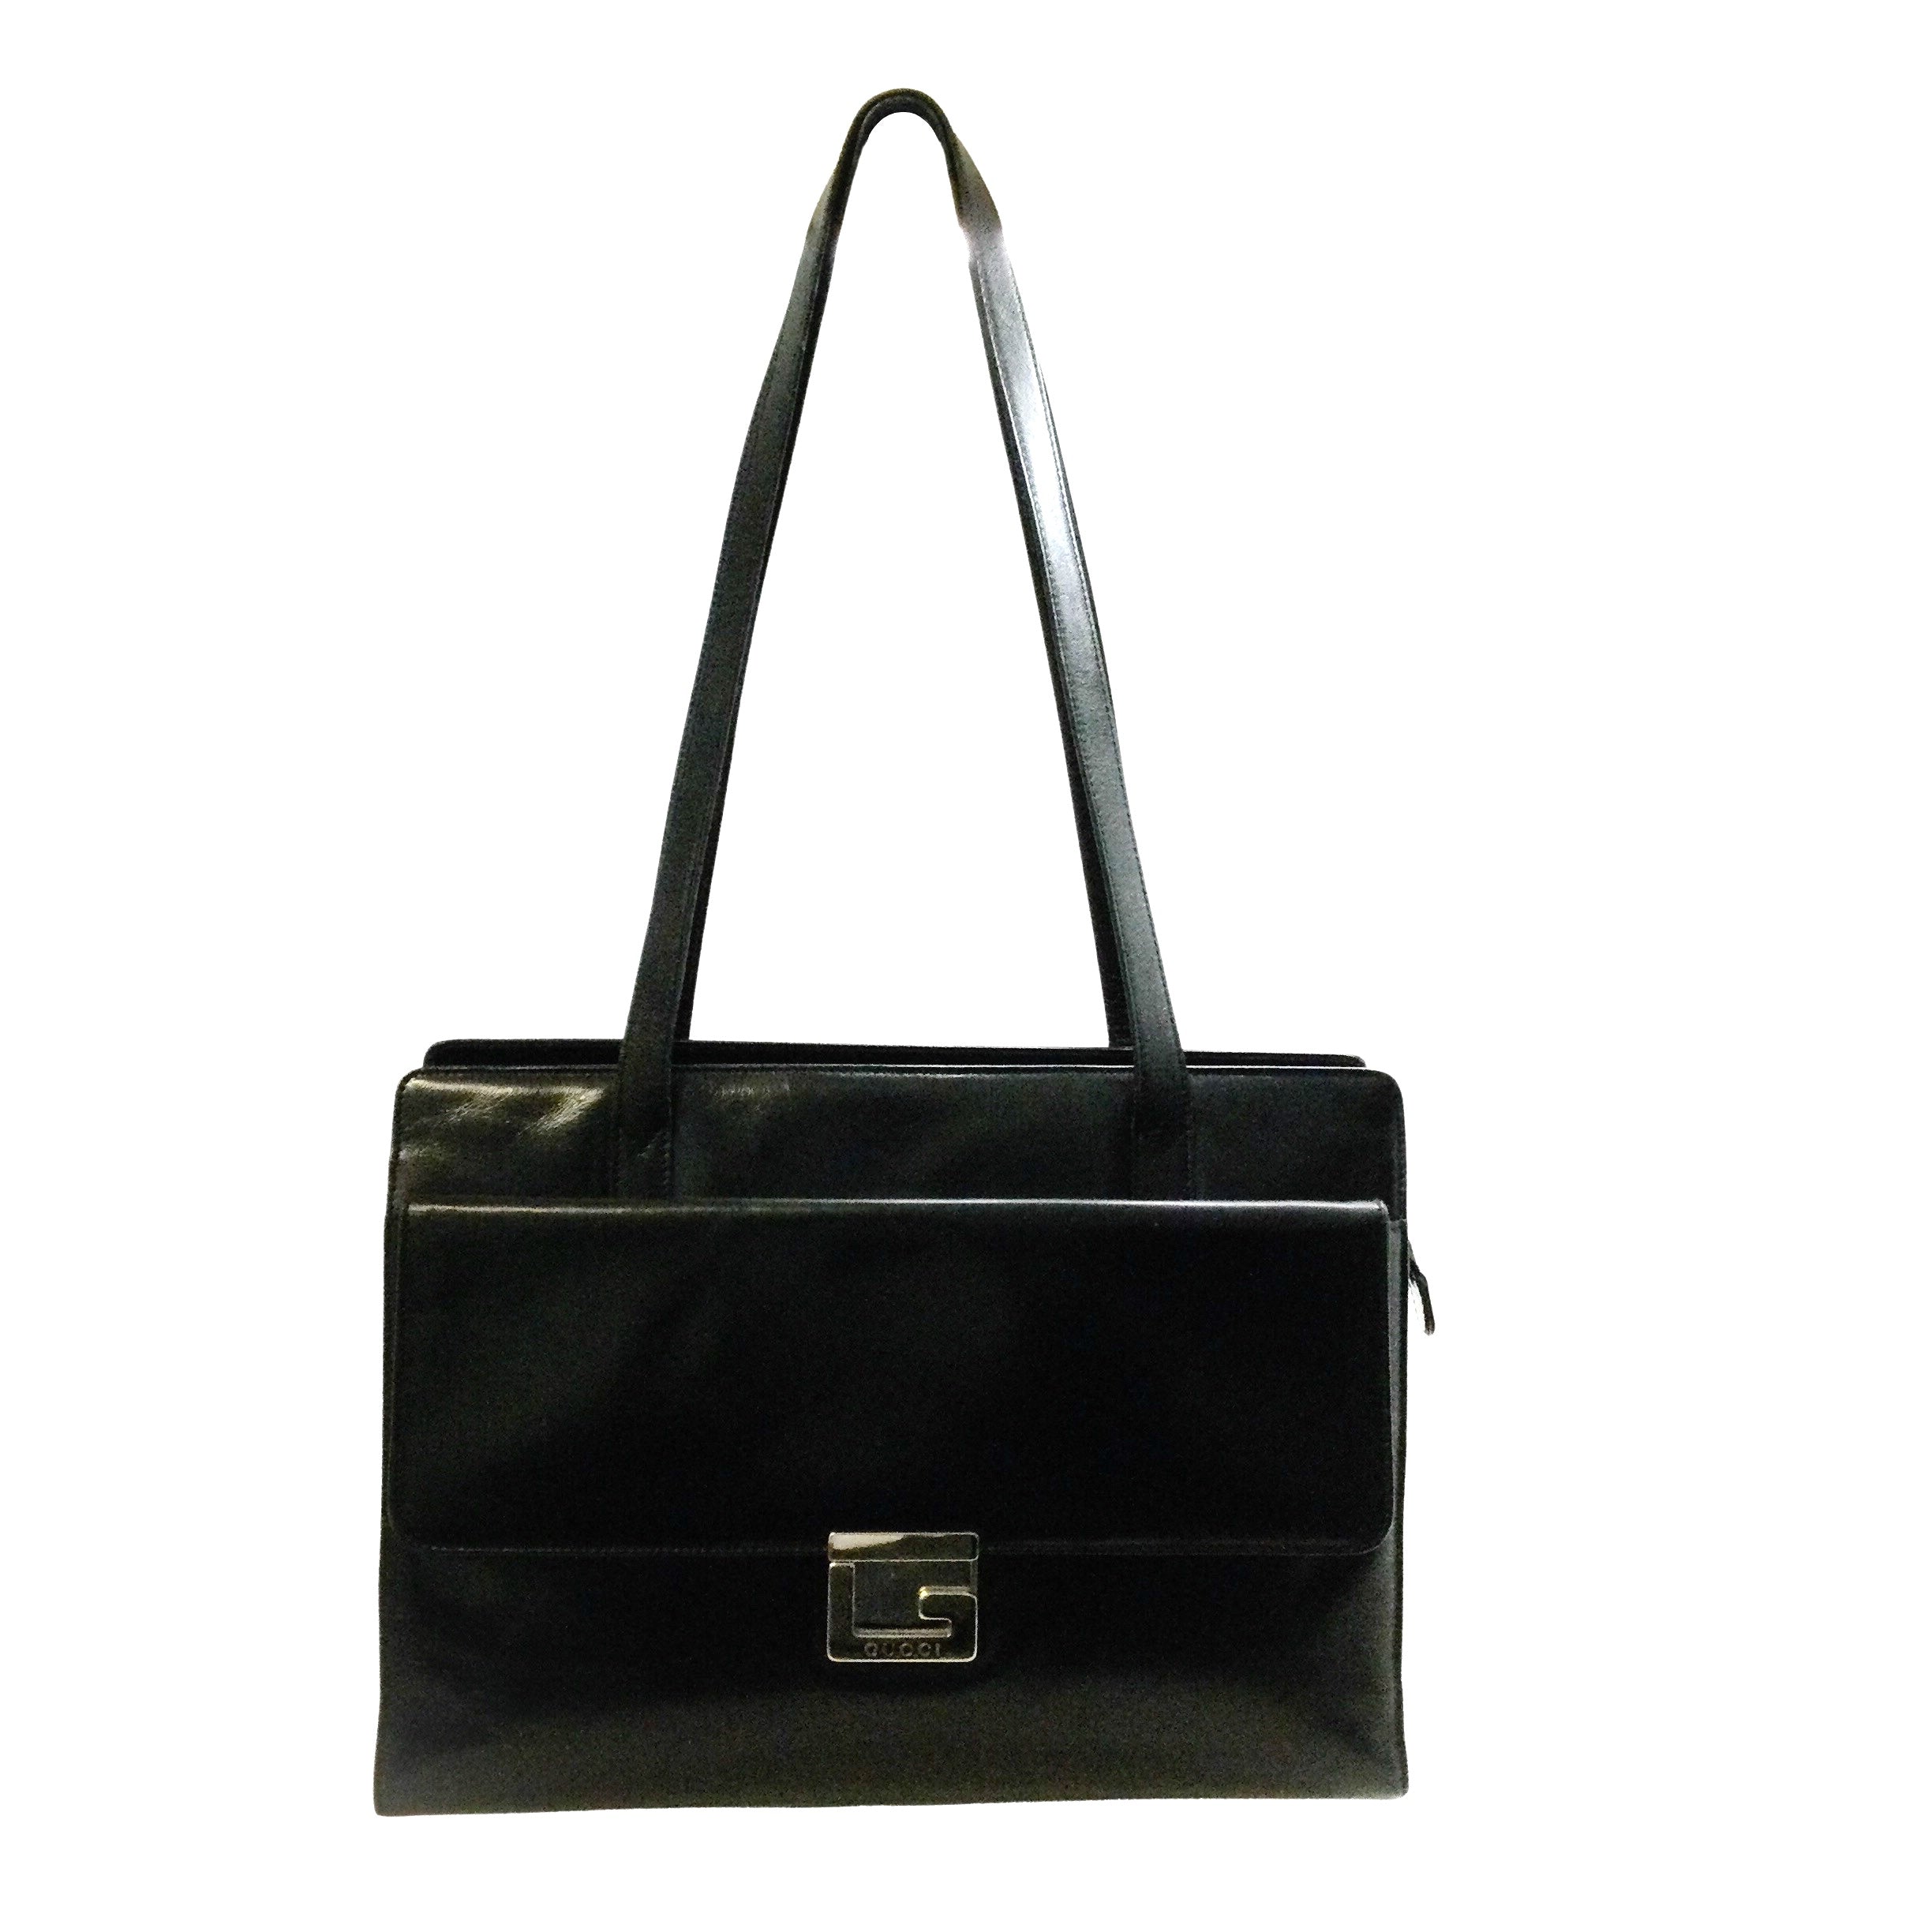 Handbags Chanel Chanel 2014-2015 Paris - Dallas Beige Snakeskin Leather Shoulder Bag